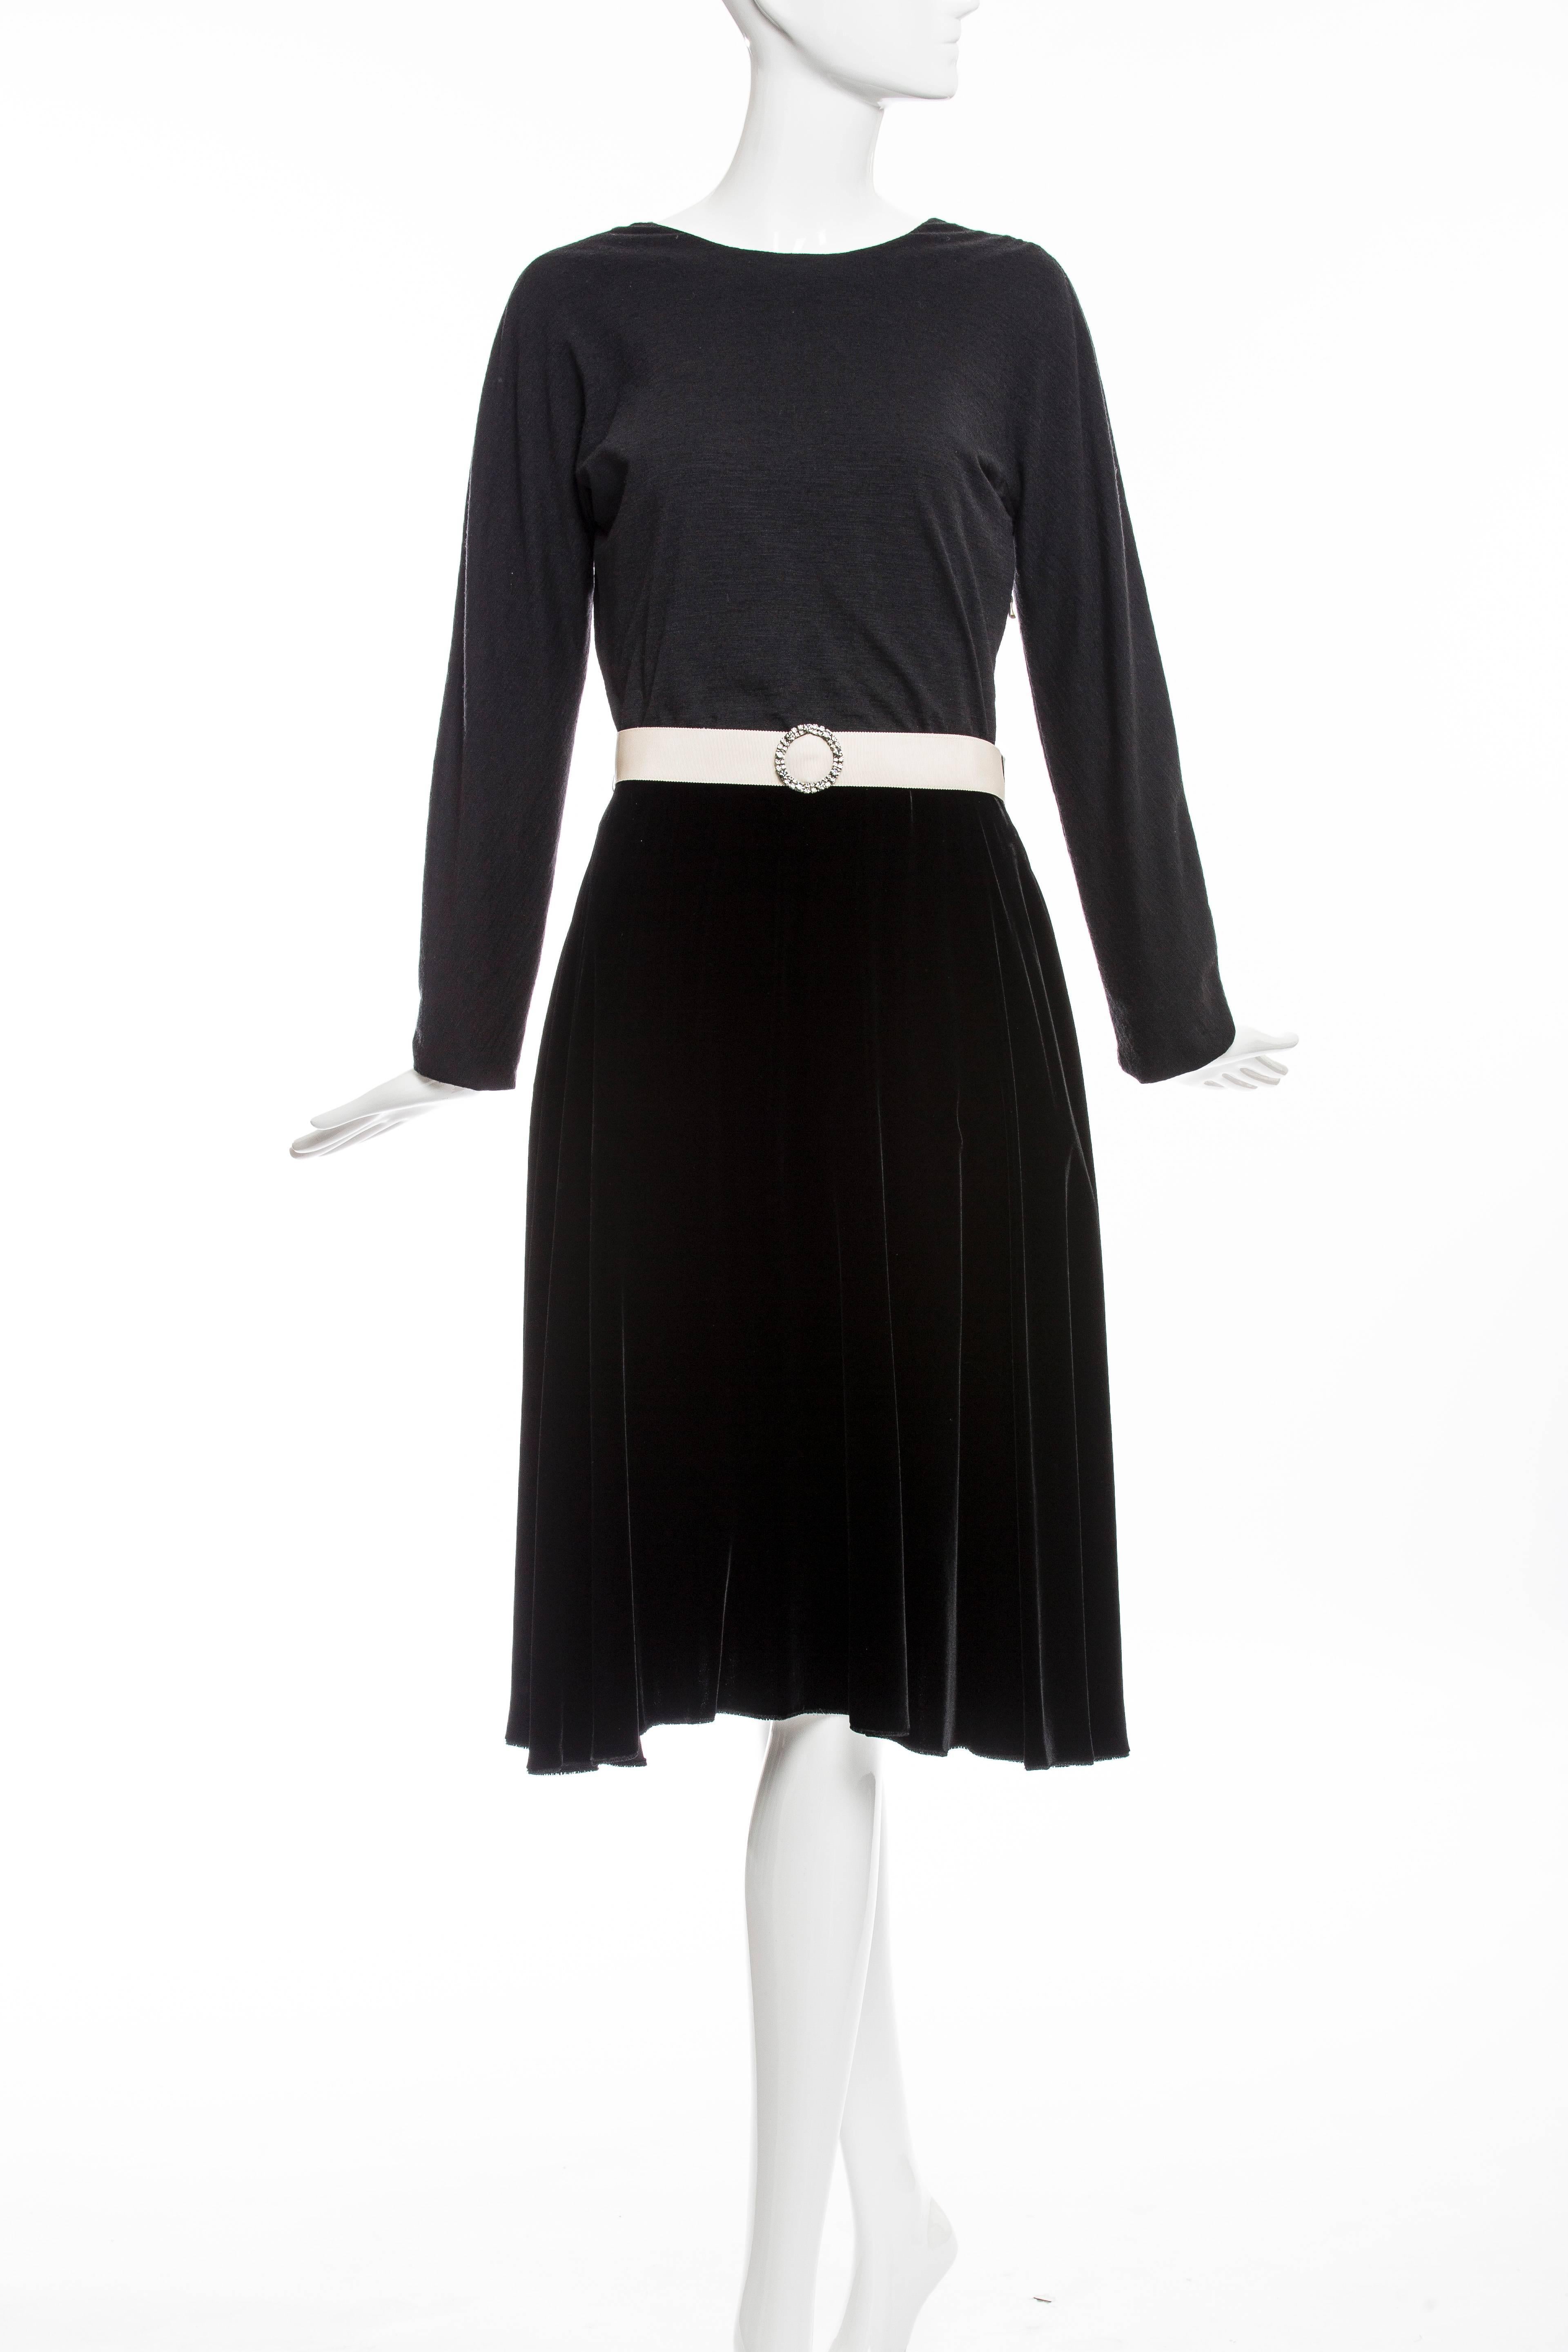 Lanvin Black Wool Jersey Silk Velvet Evening Dress,  Fall 2006 In New Condition For Sale In Cincinnati, OH